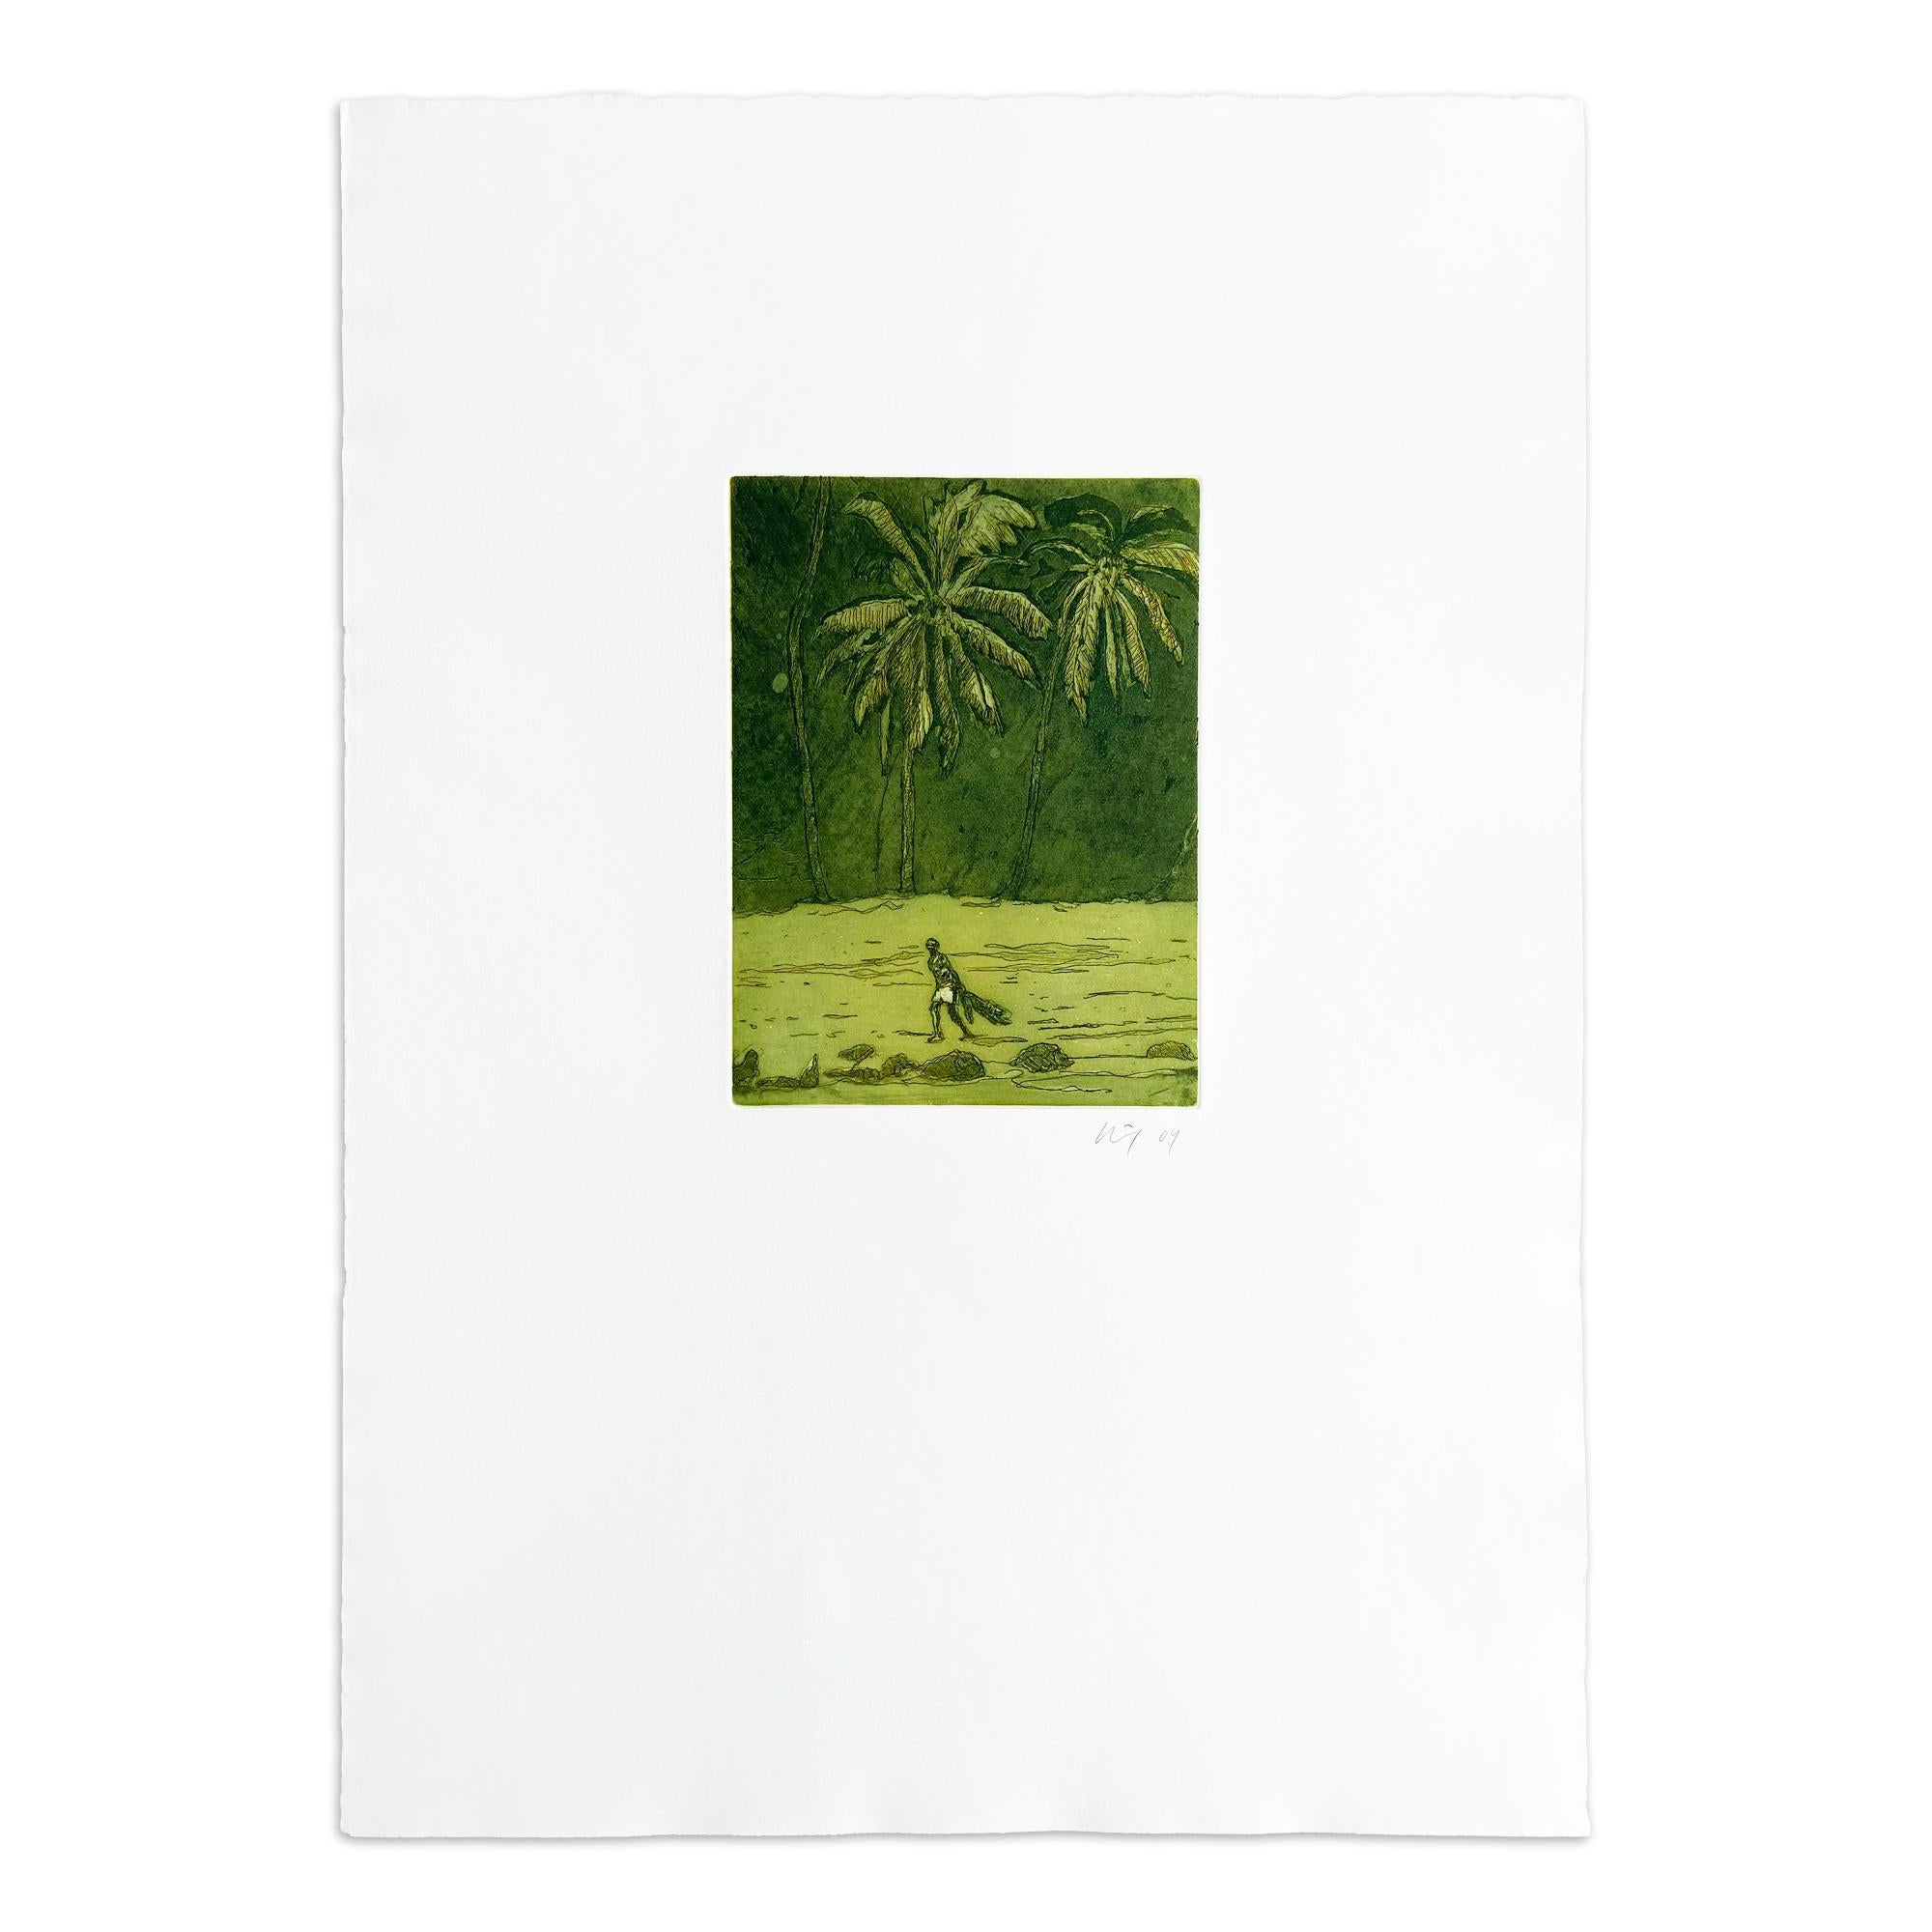 Peter Doig Landscape Print - Pelican, from Black Palms, Etching, British Art, Contemporary Art, 21st Century